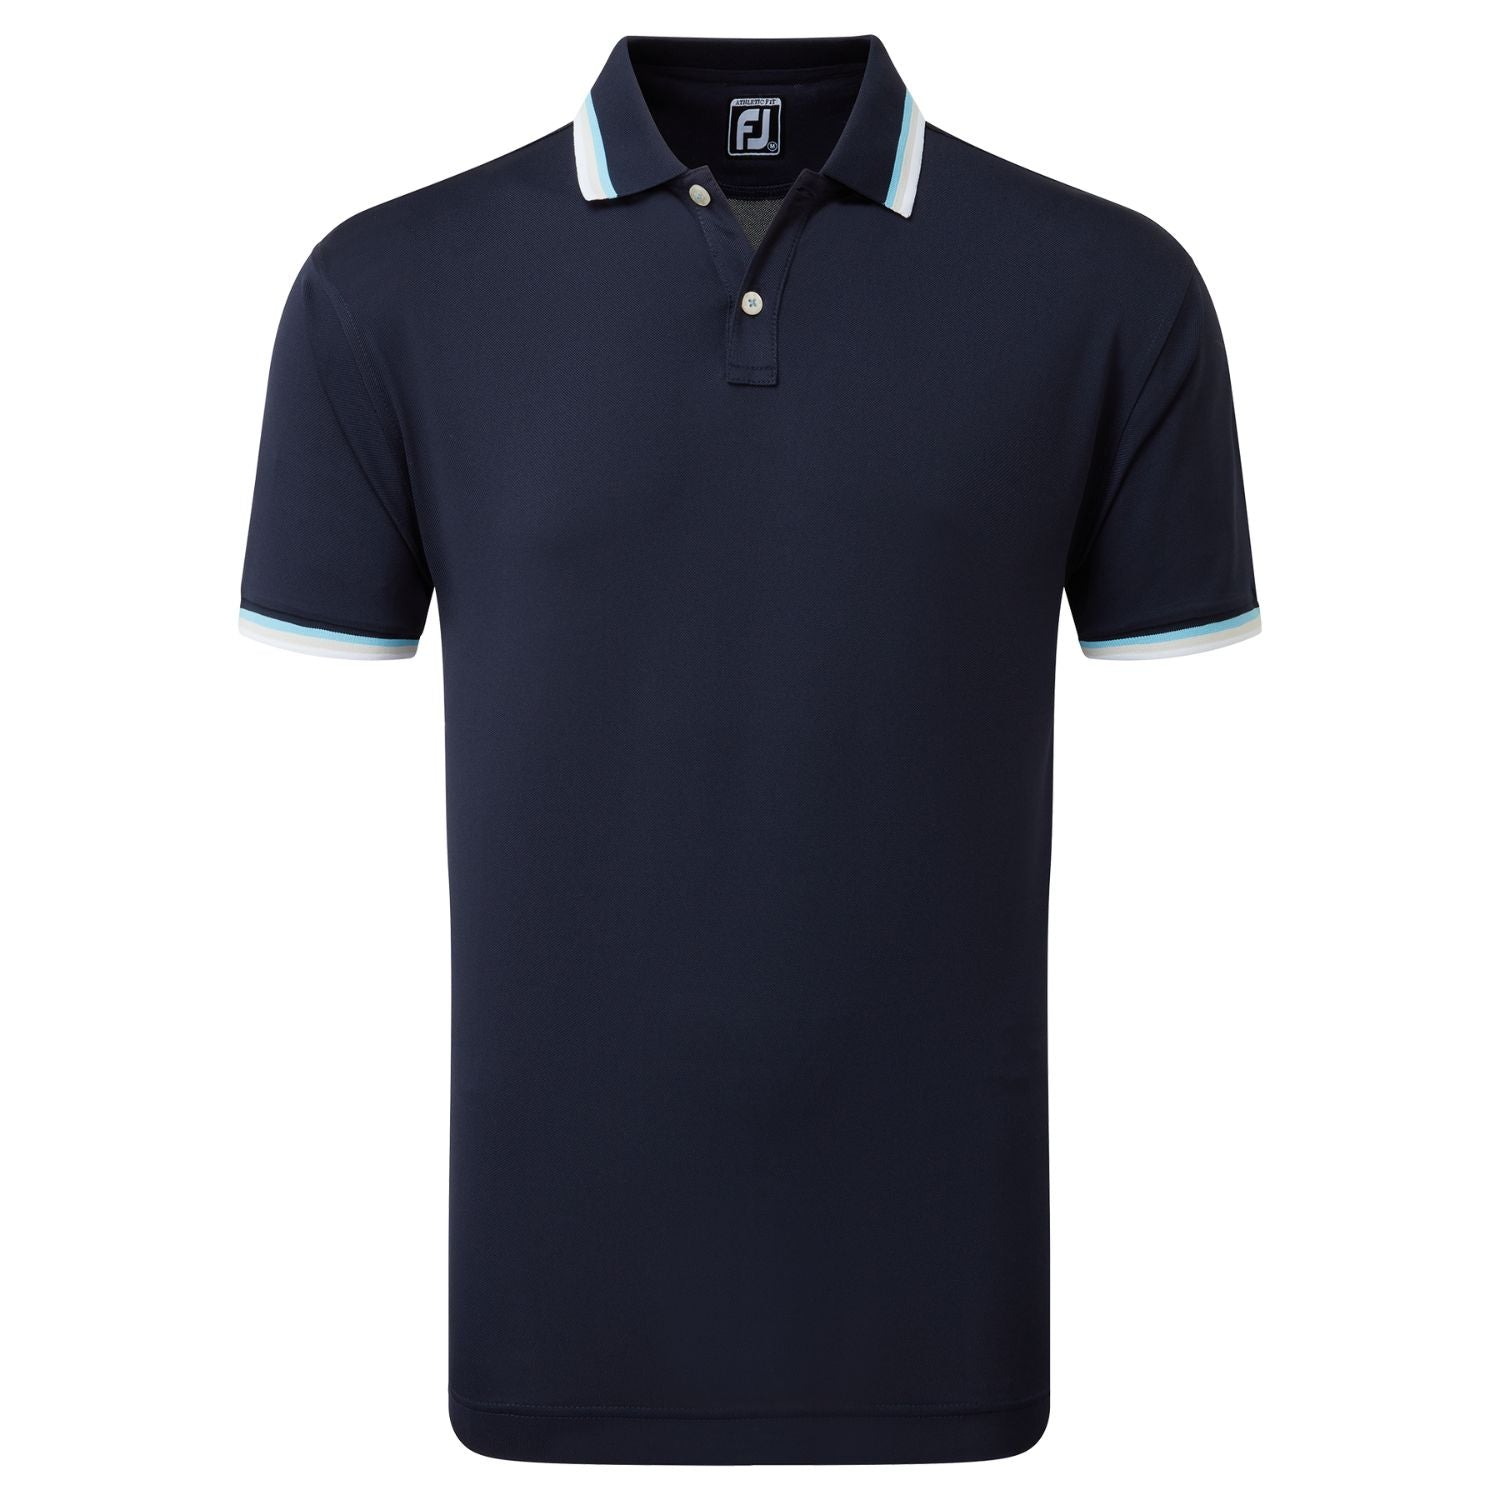 FootJoy Solid with Trim Pique Golf Polo Shirt